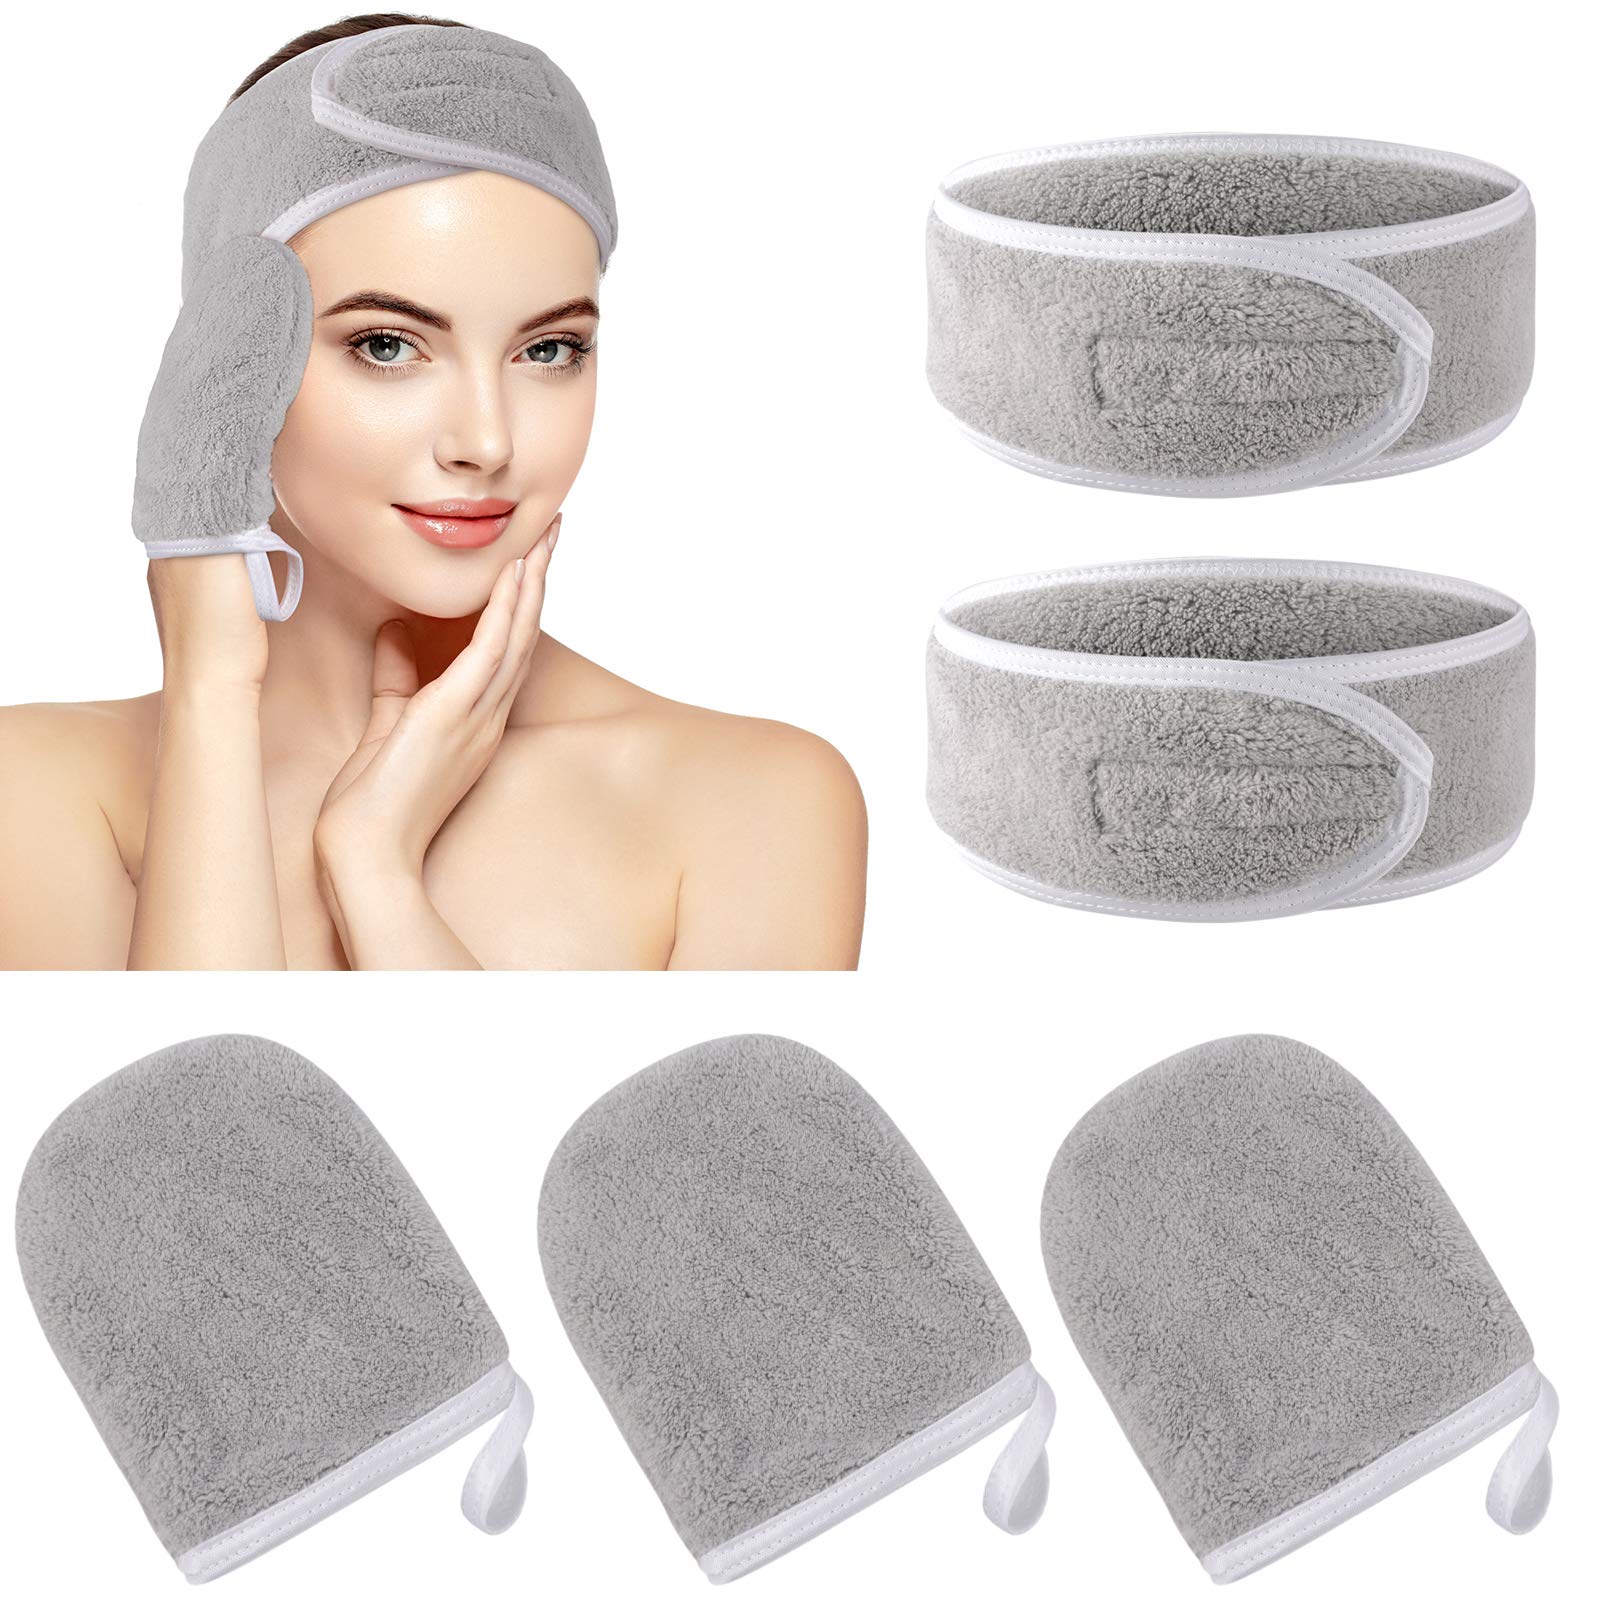 Reusable microfibre facial mitts sets with headbands